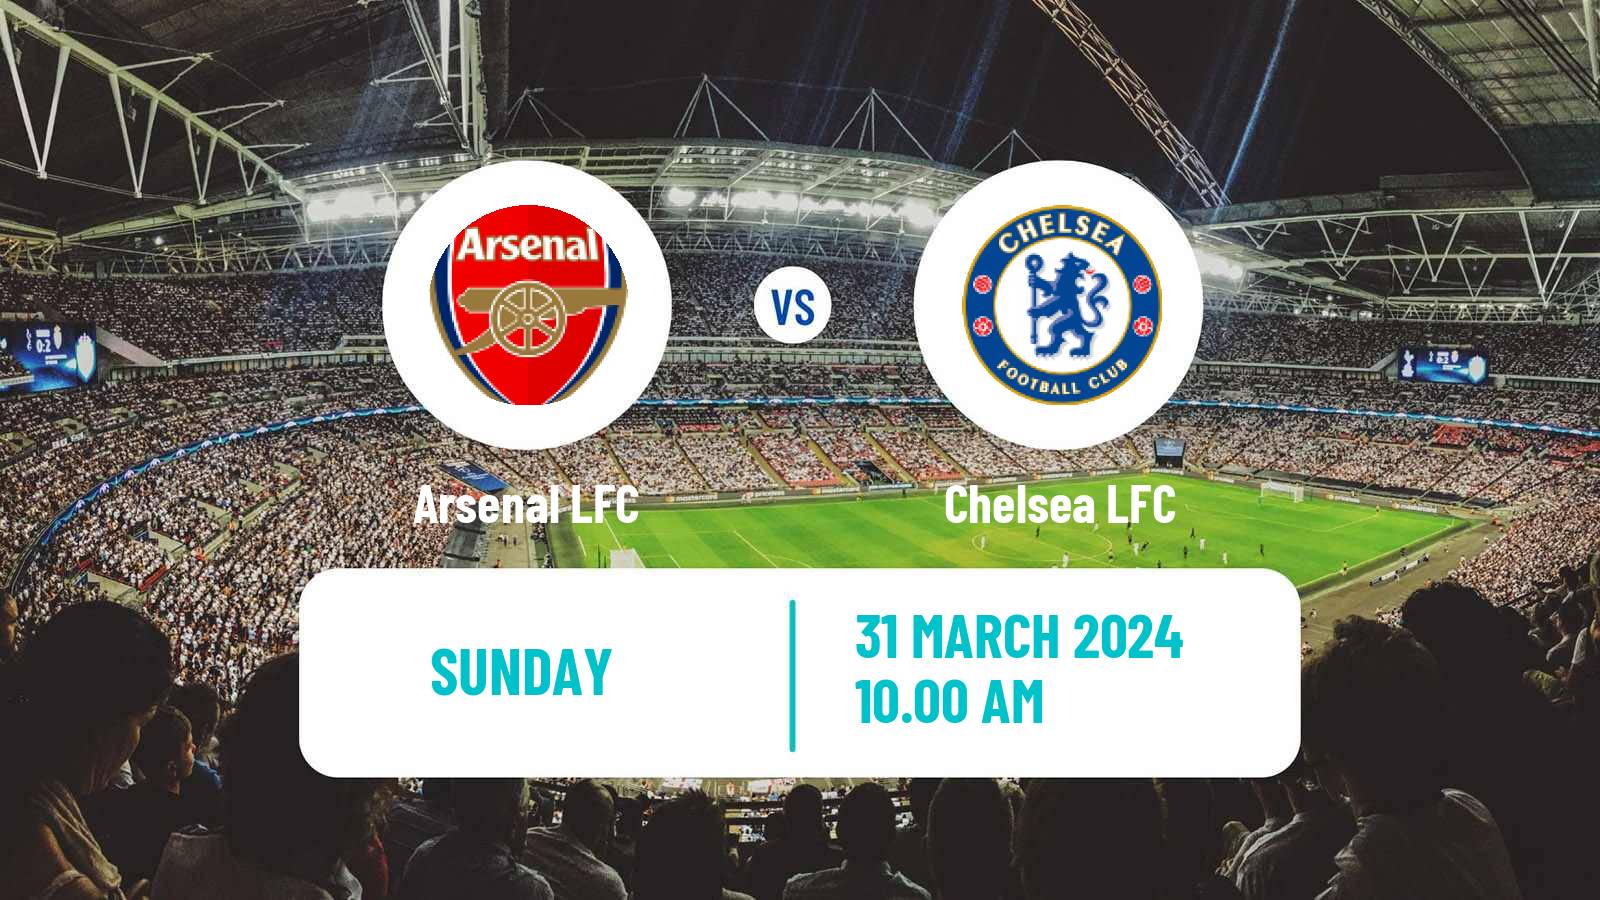 Soccer English League Cup Women Arsenal LFC - Chelsea